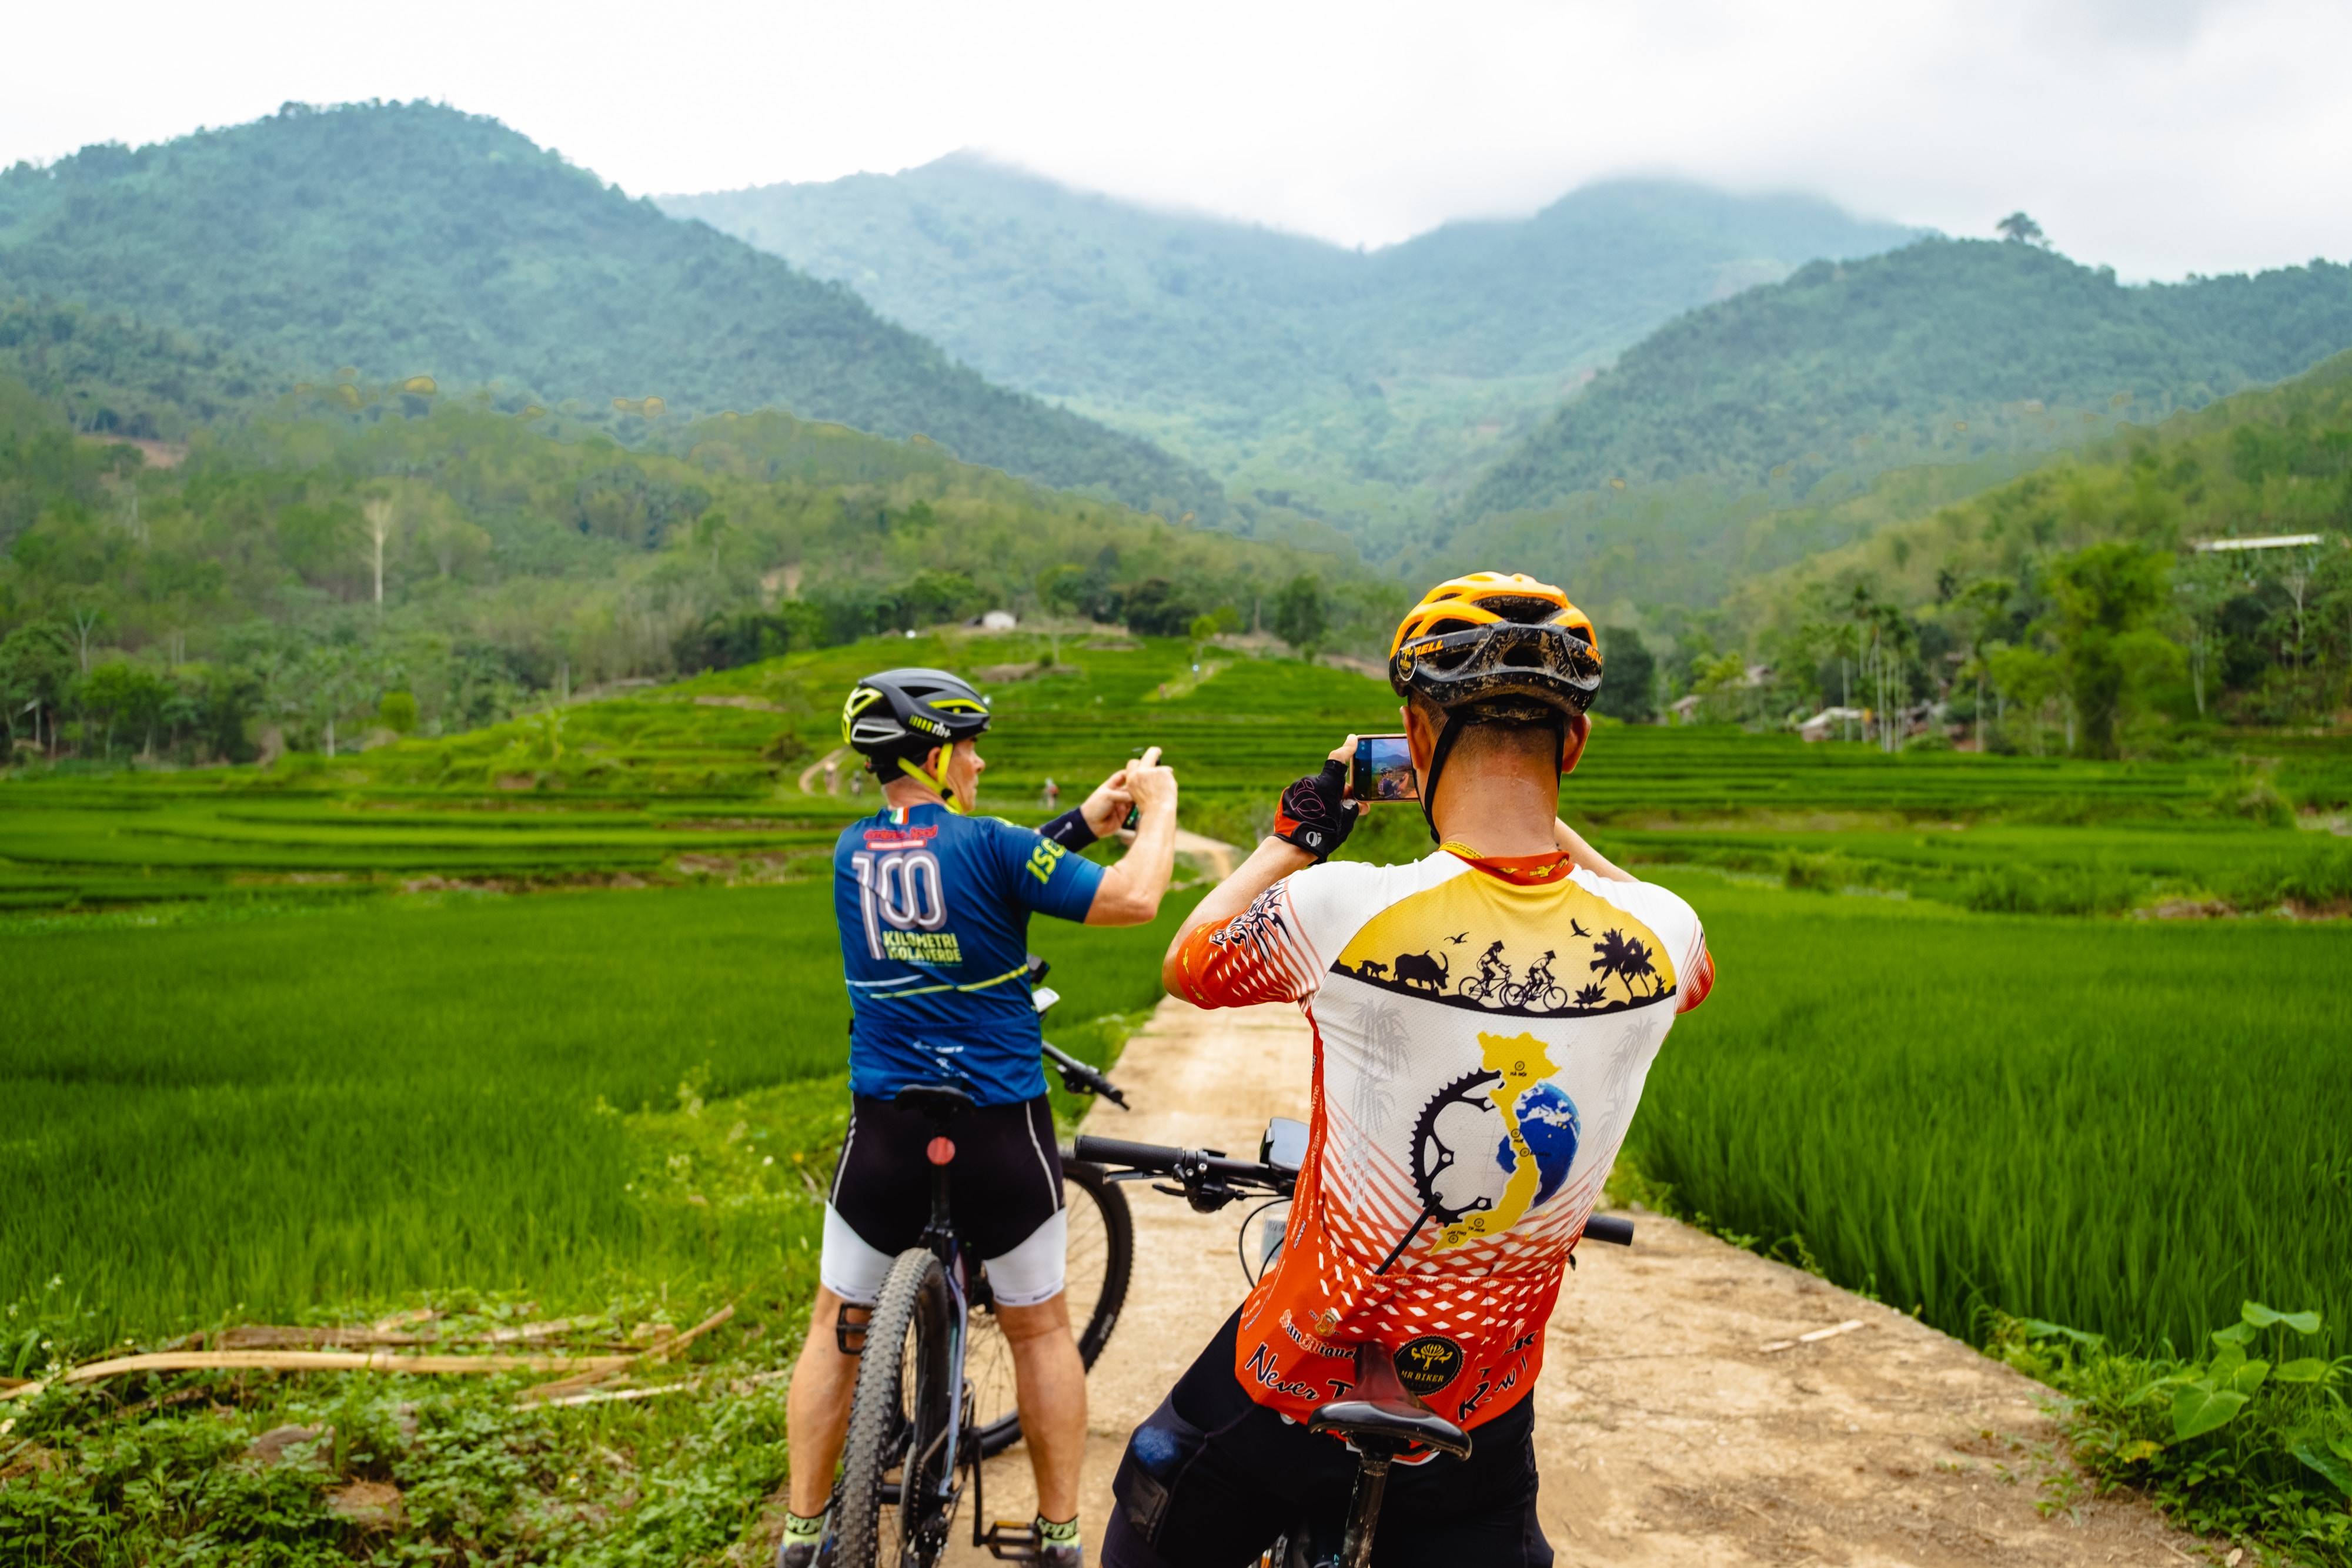 ciclisti lungo risaie del vietnam